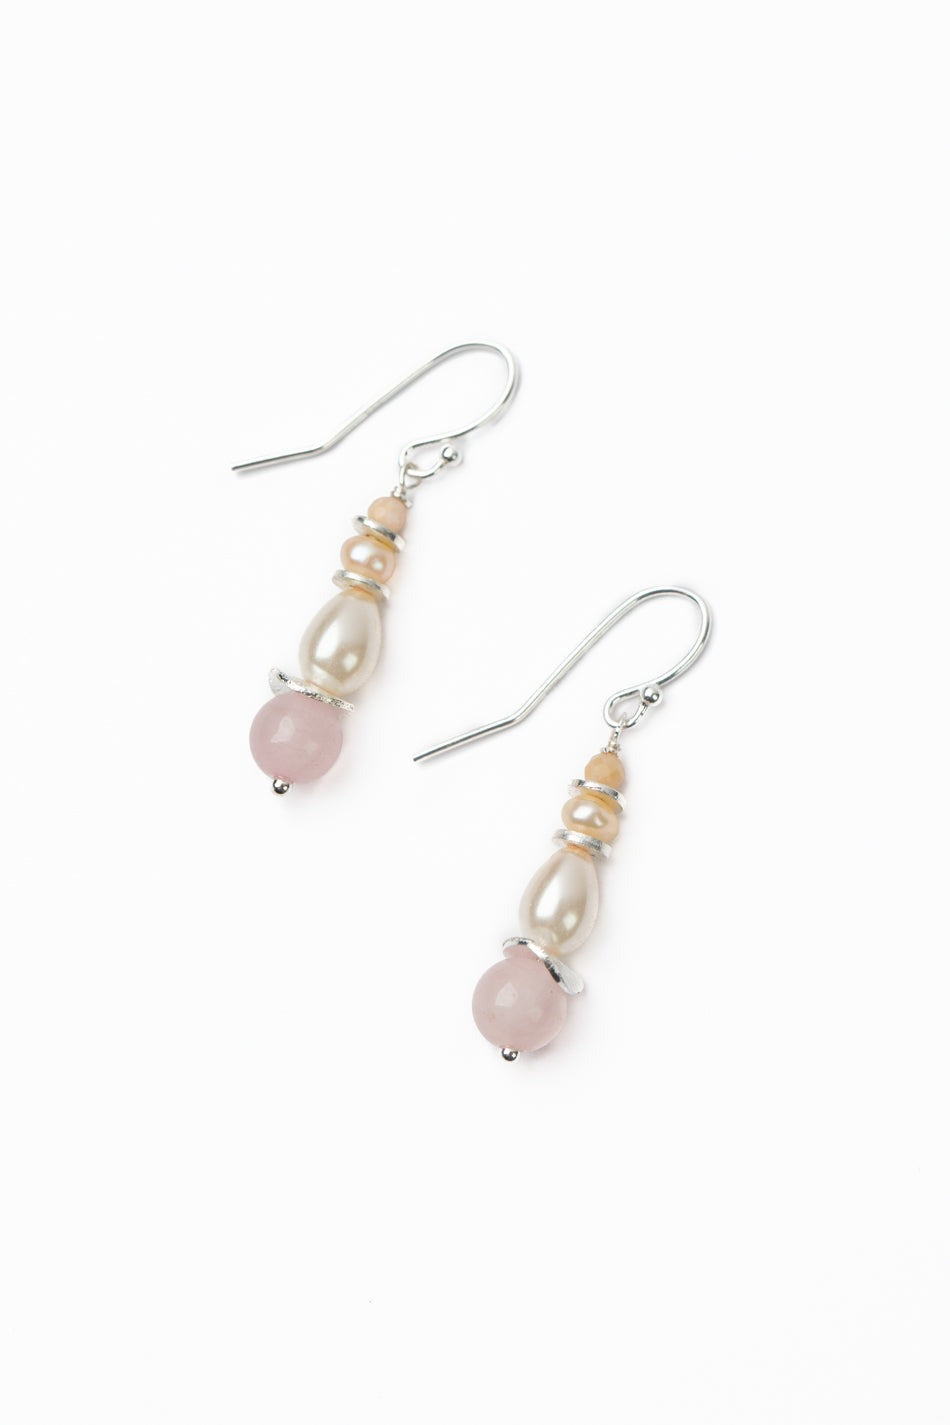 Embrace Earrings Freshwater Pearl, Czech Glass, and Rose Quartz